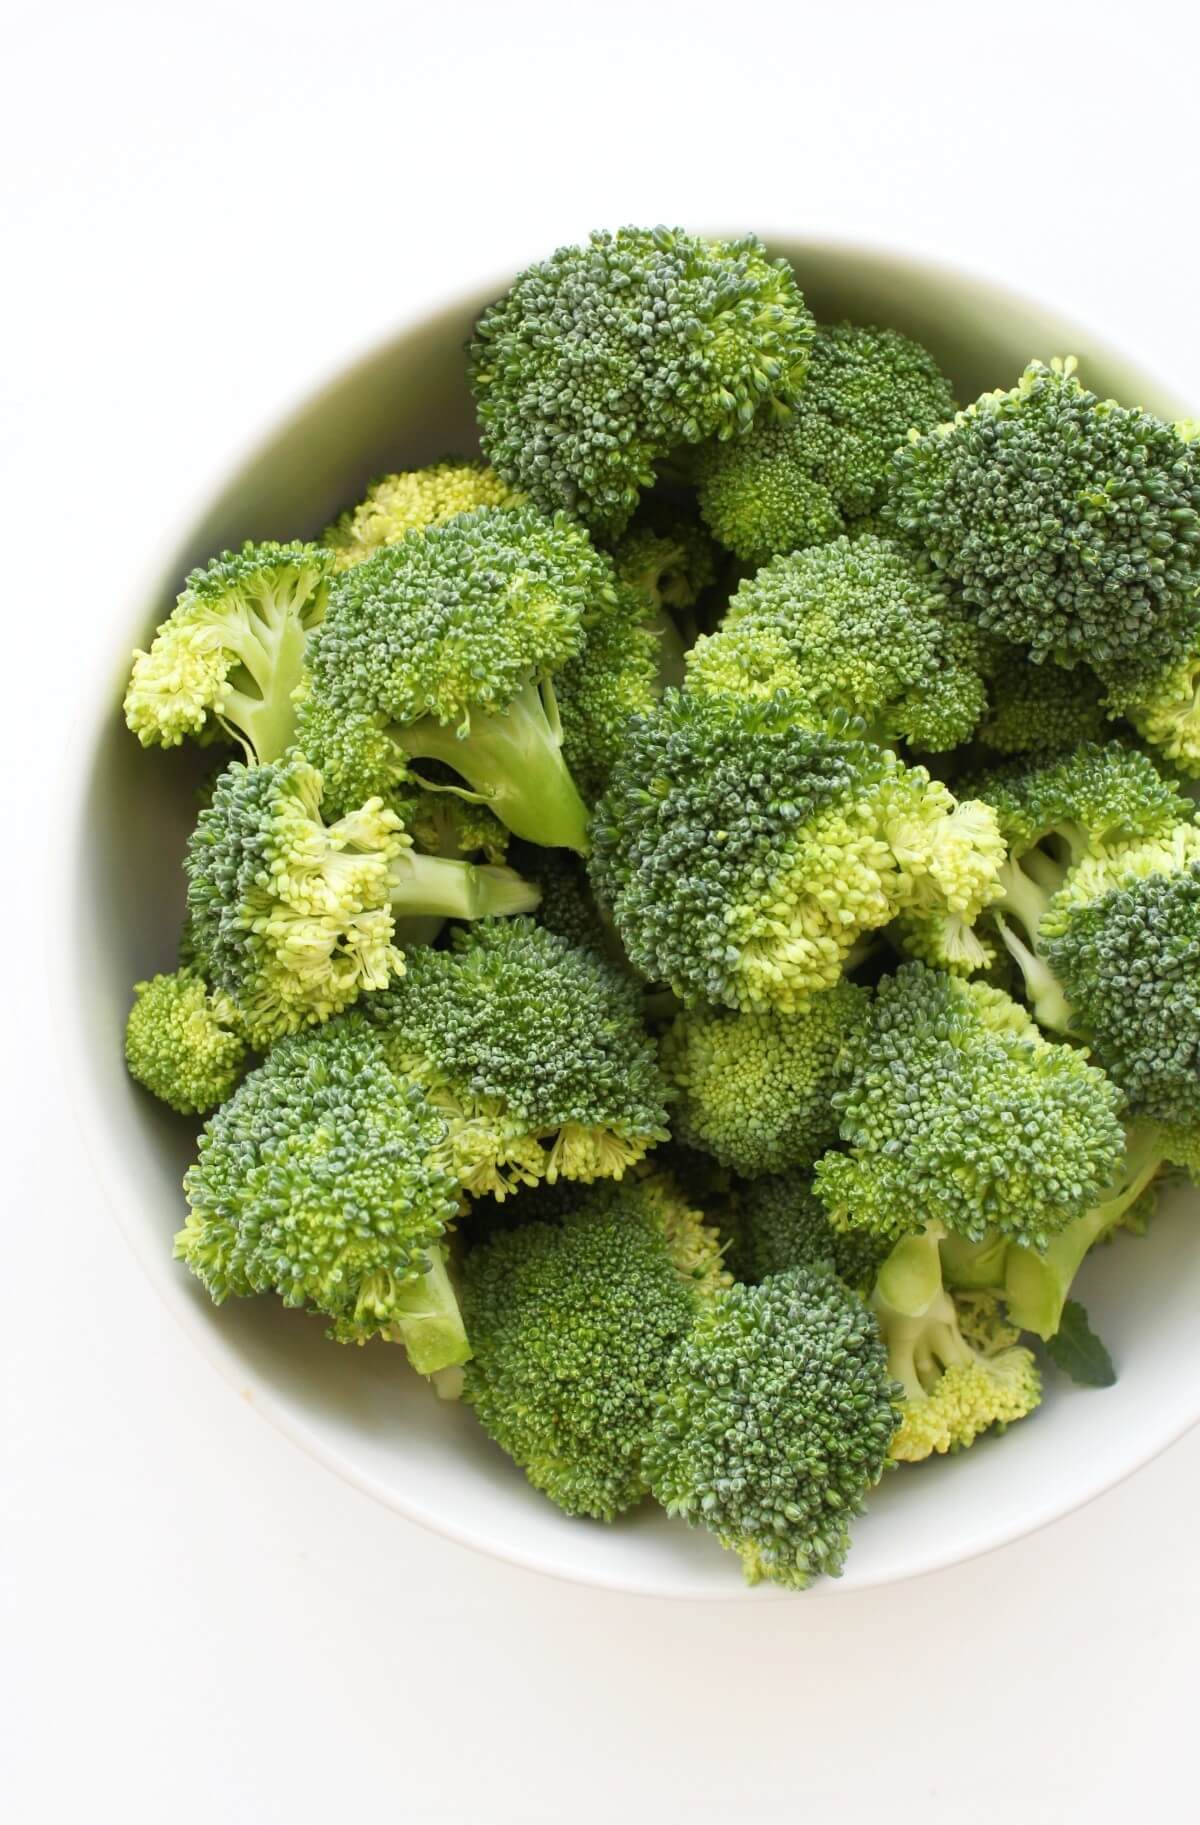 raw broccoli florets in bowl